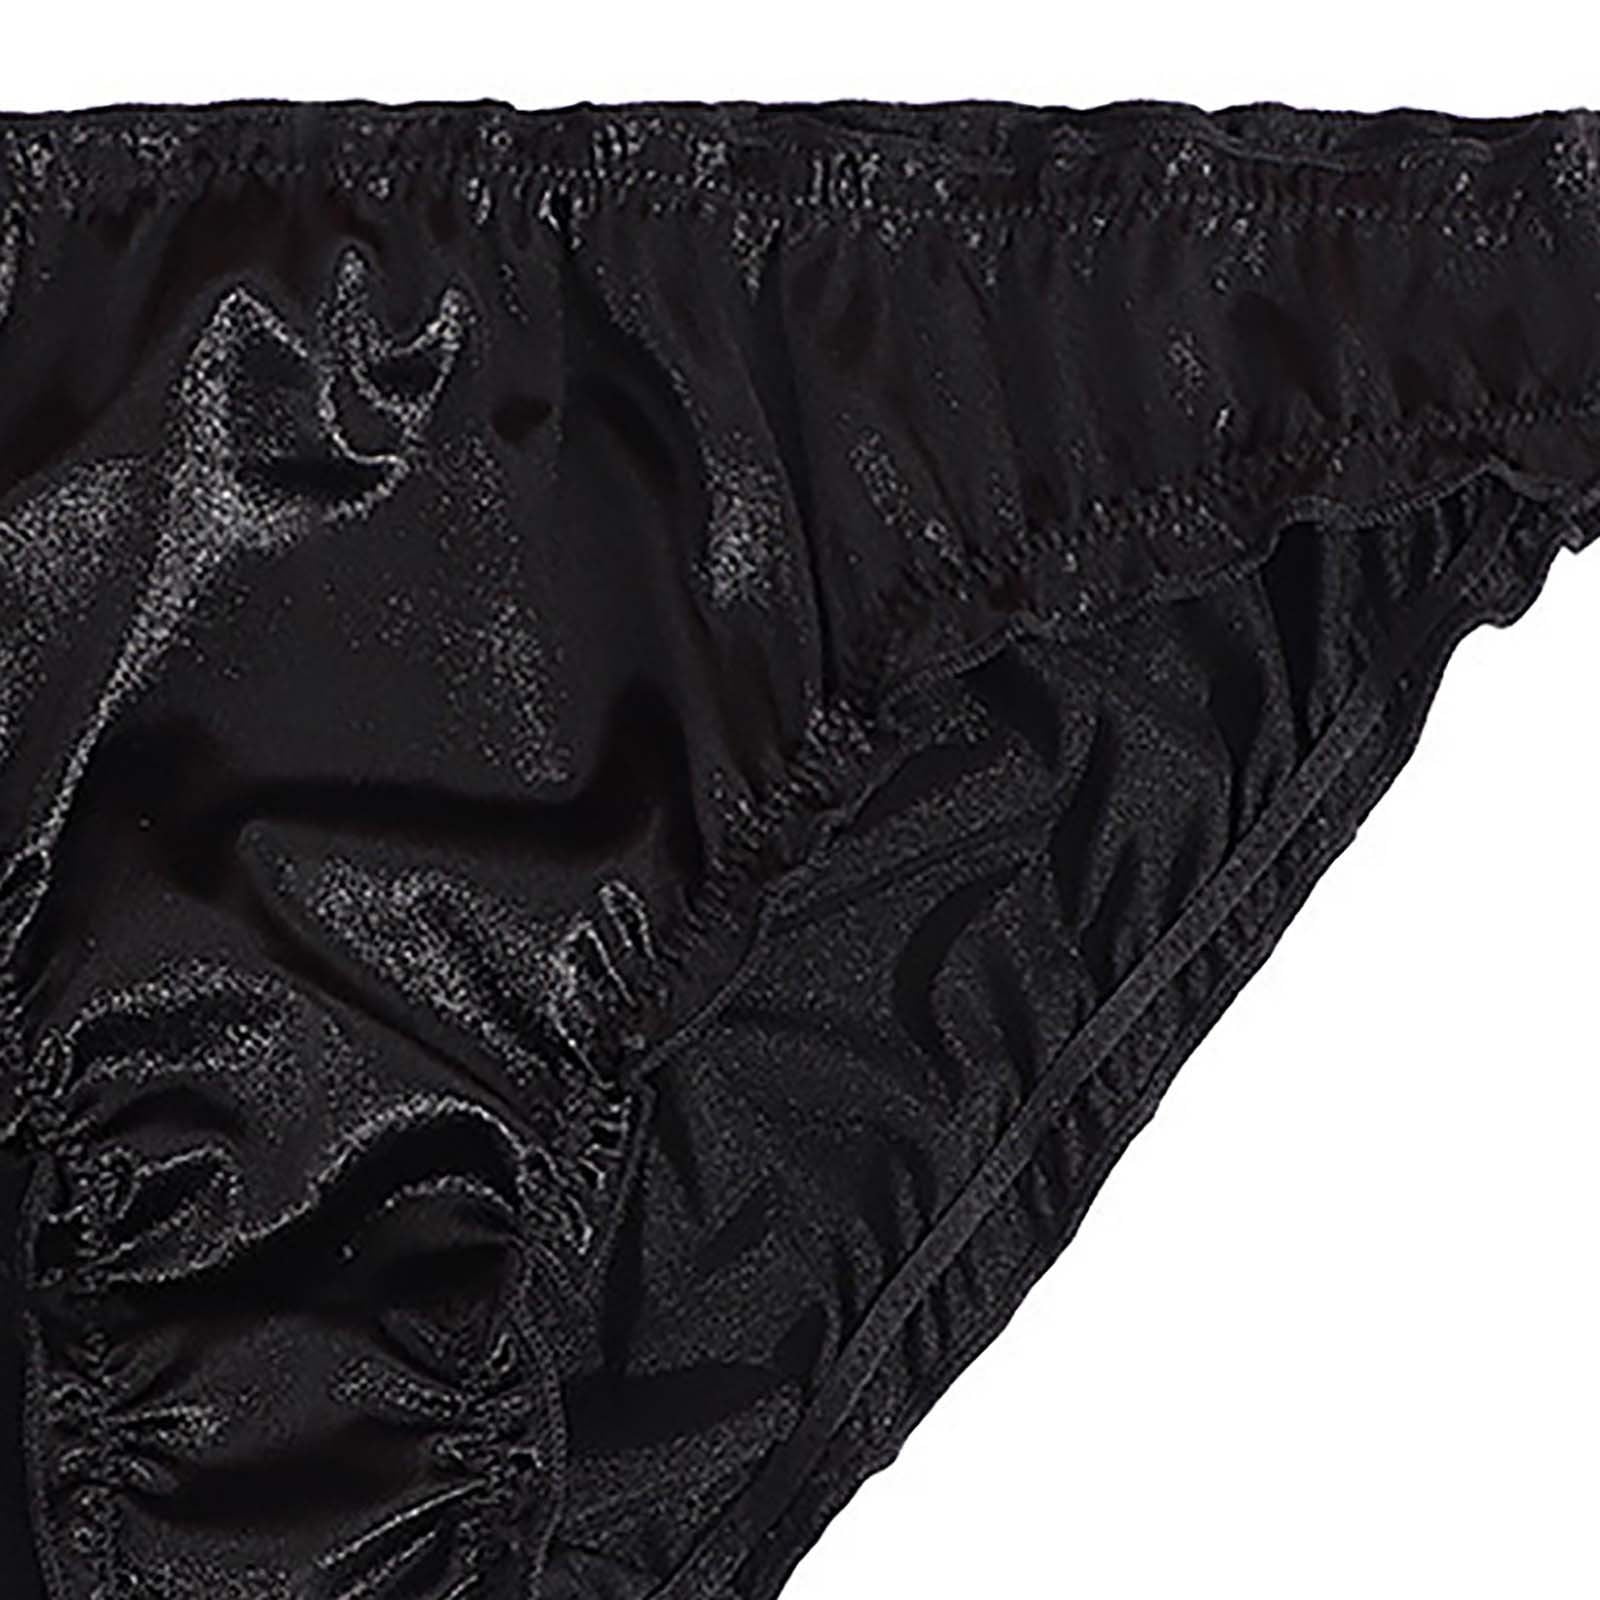 Lopecy-Sta Women's Sexy Satin Panties Mid Waist Wavy Cotton Crotch